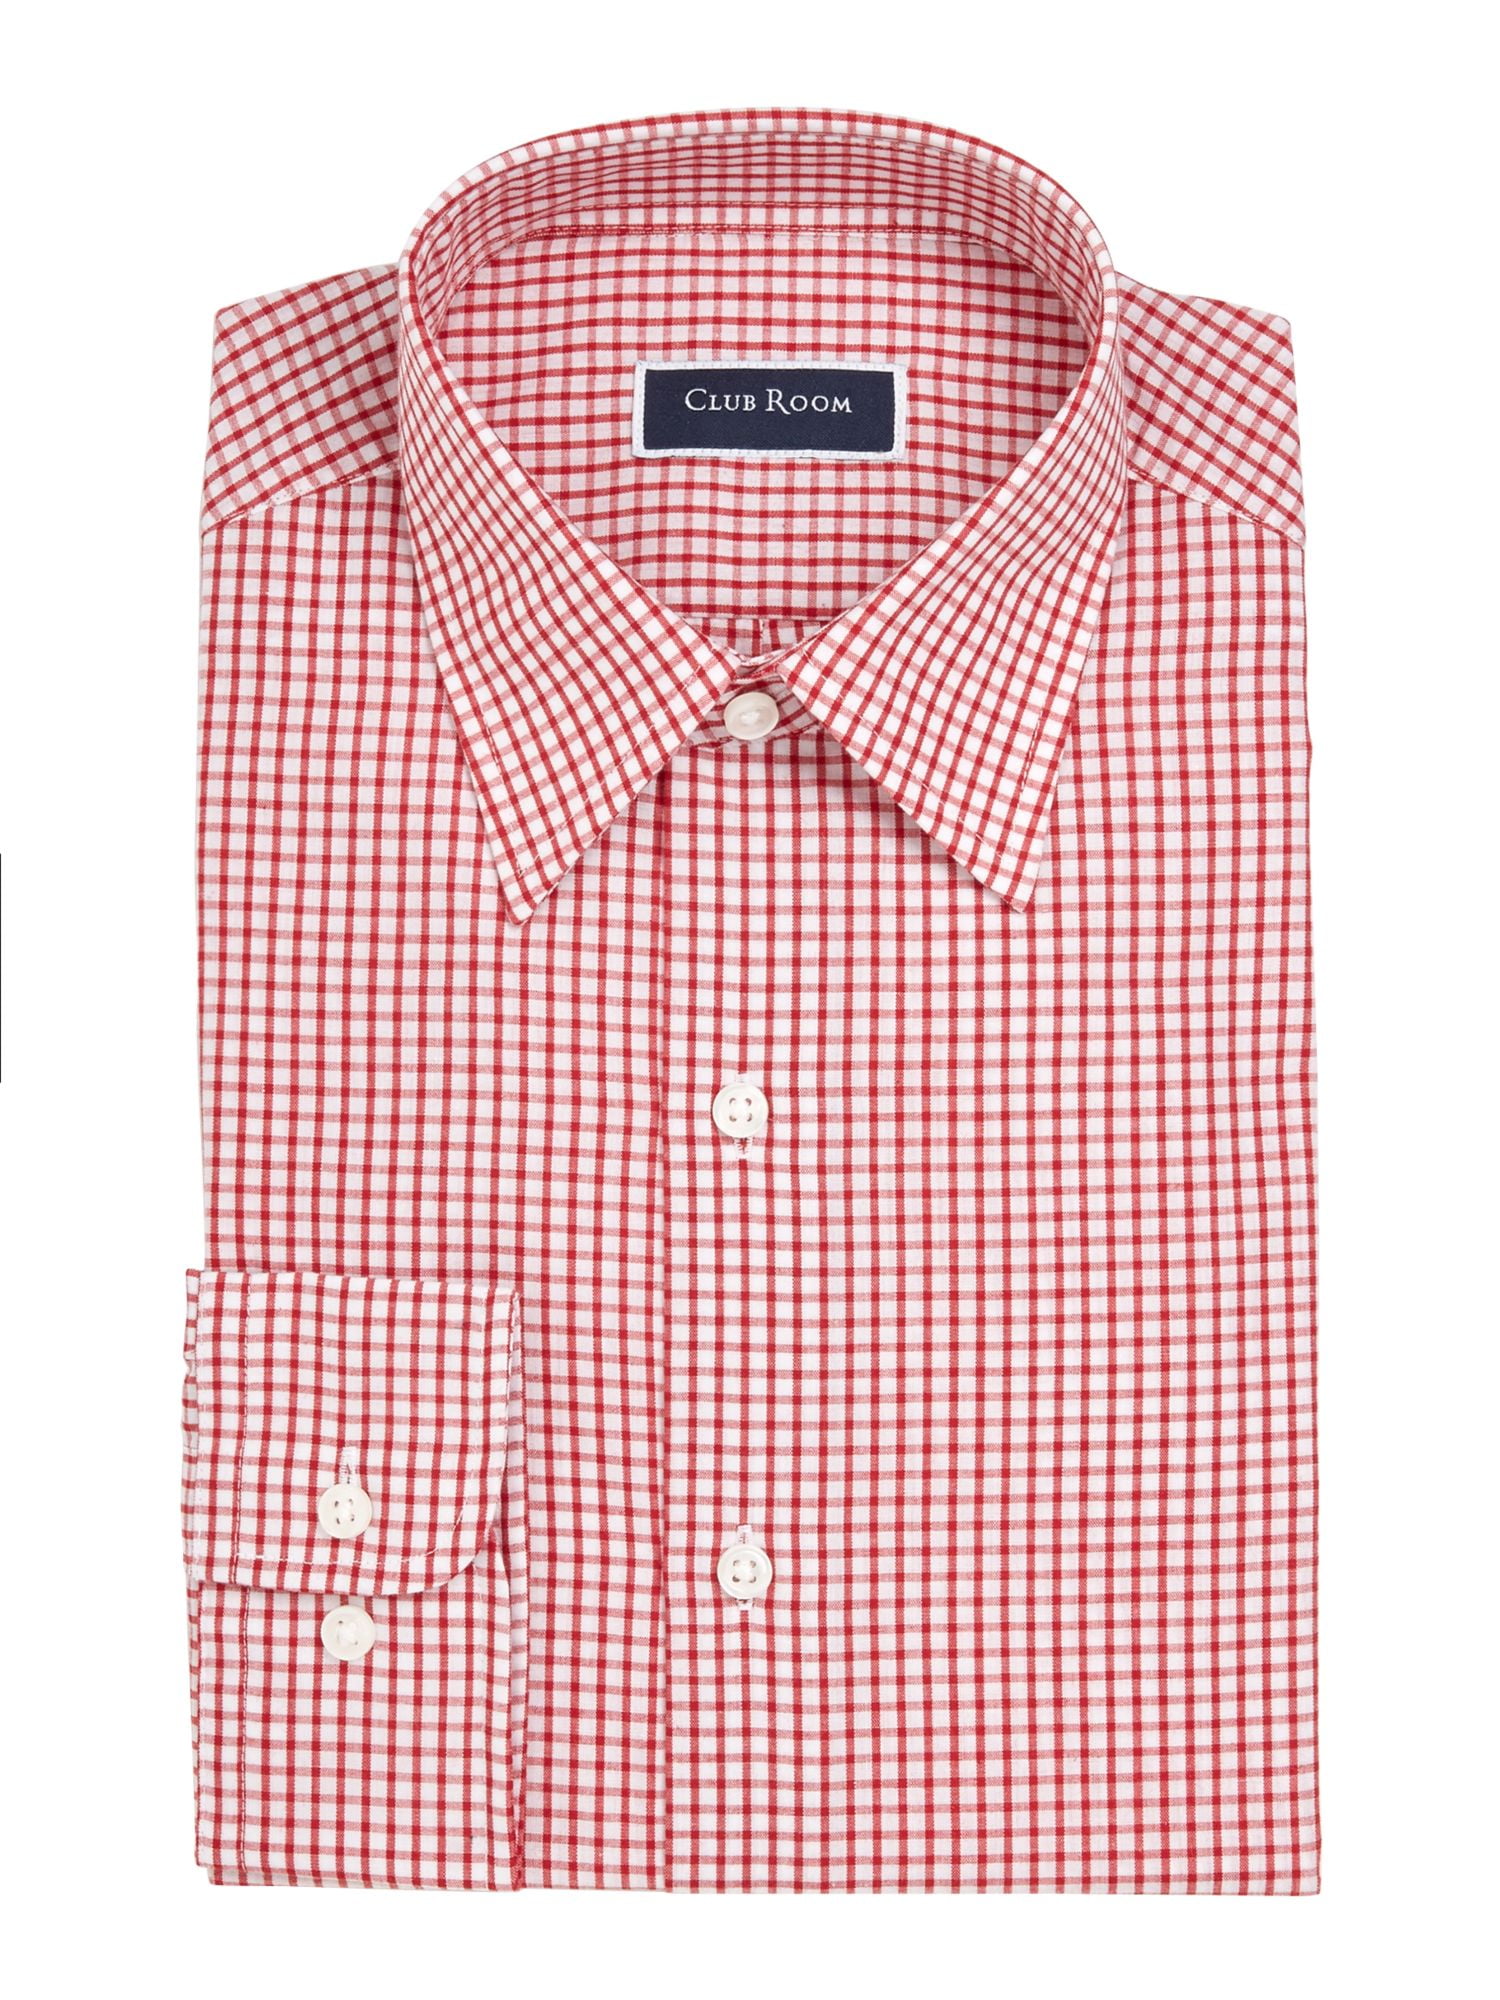 $95 CLUB ROOM Men's REGULAR-FIT WHITE PINK CHECK BUTTON DRESS SHIRT 15.5 32/33 M 